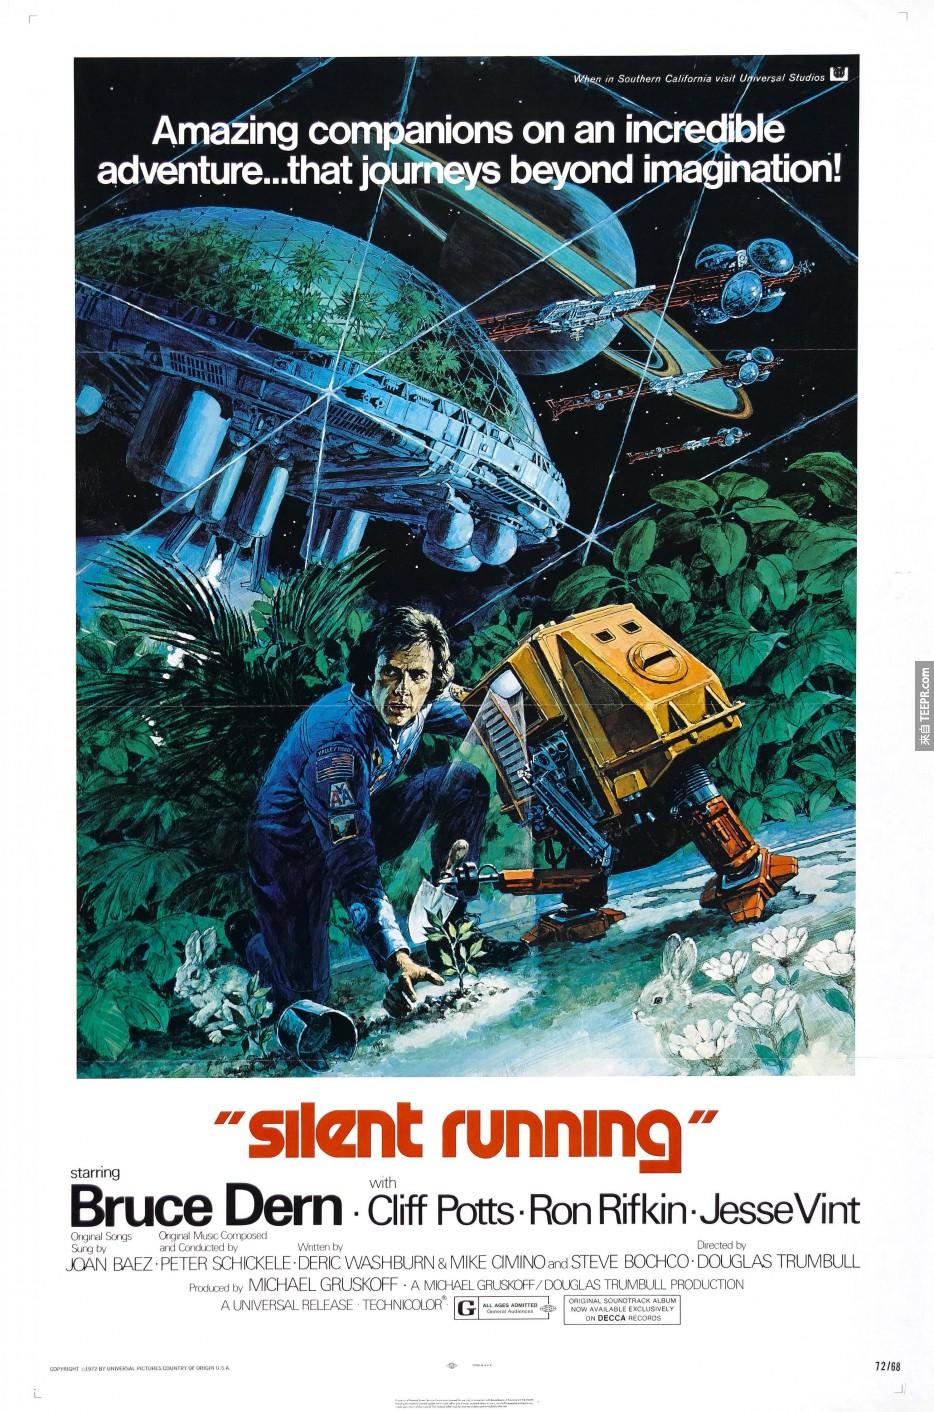 Bahnhof的董事长Jon Karlung说，这些植物和瀑布造景的灵感来源，是来自于1972年Bruce Dern的科幻片「Silent Running」。